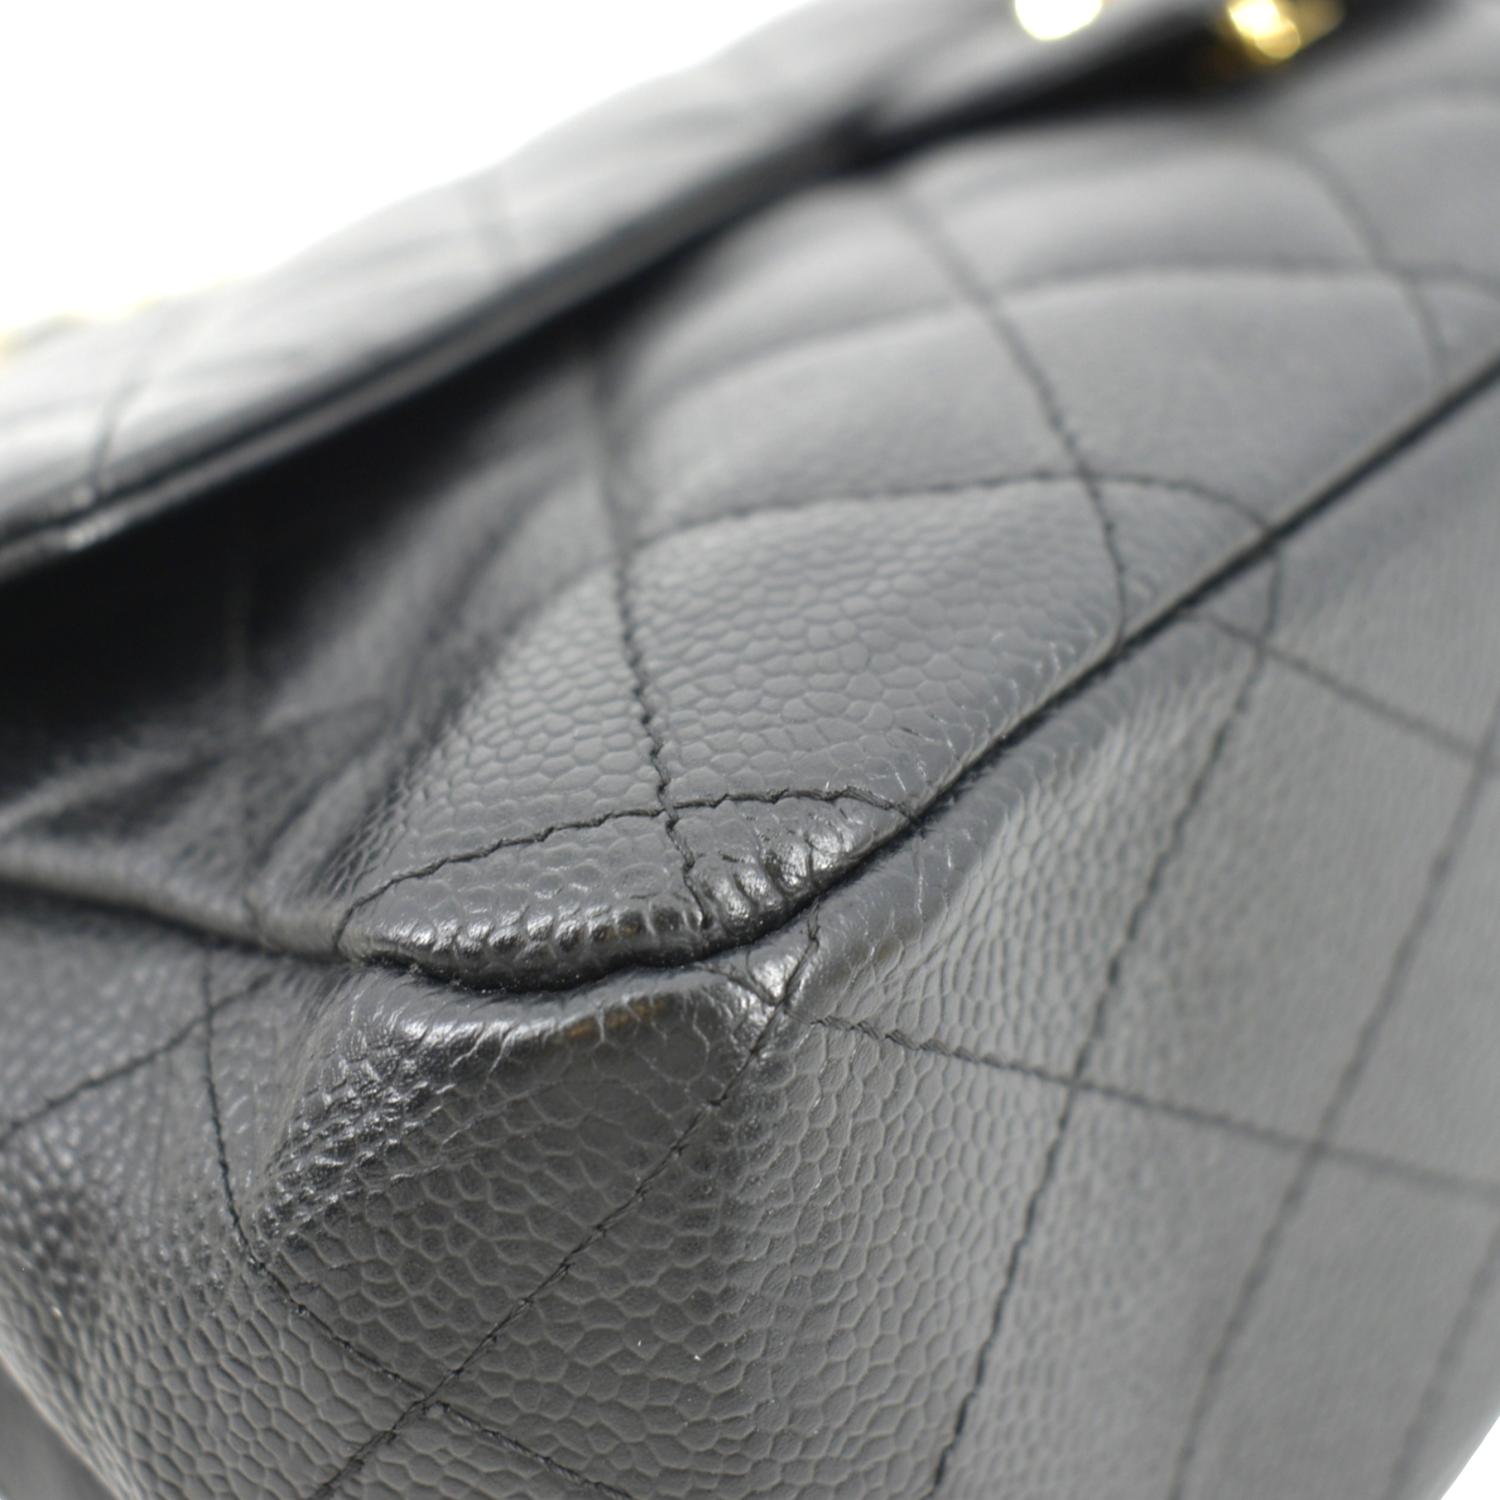 Black Chanel Jumbo Classic Lambskin Maxi Single Flap Shoulder Bag